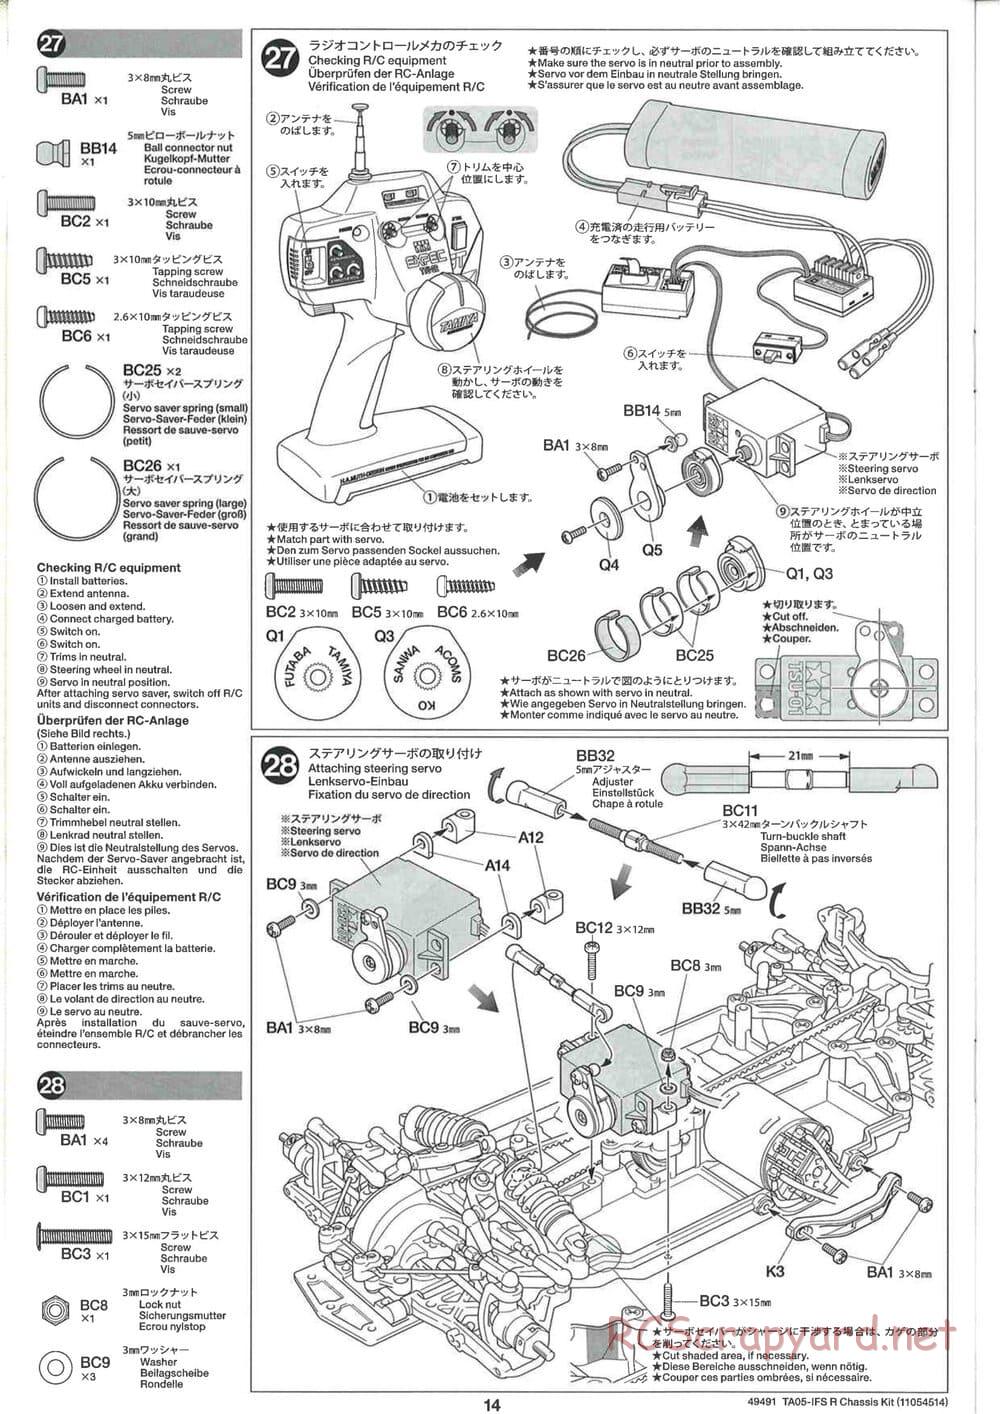 Tamiya - TA05-IFS R Chassis - Manual - Page 14